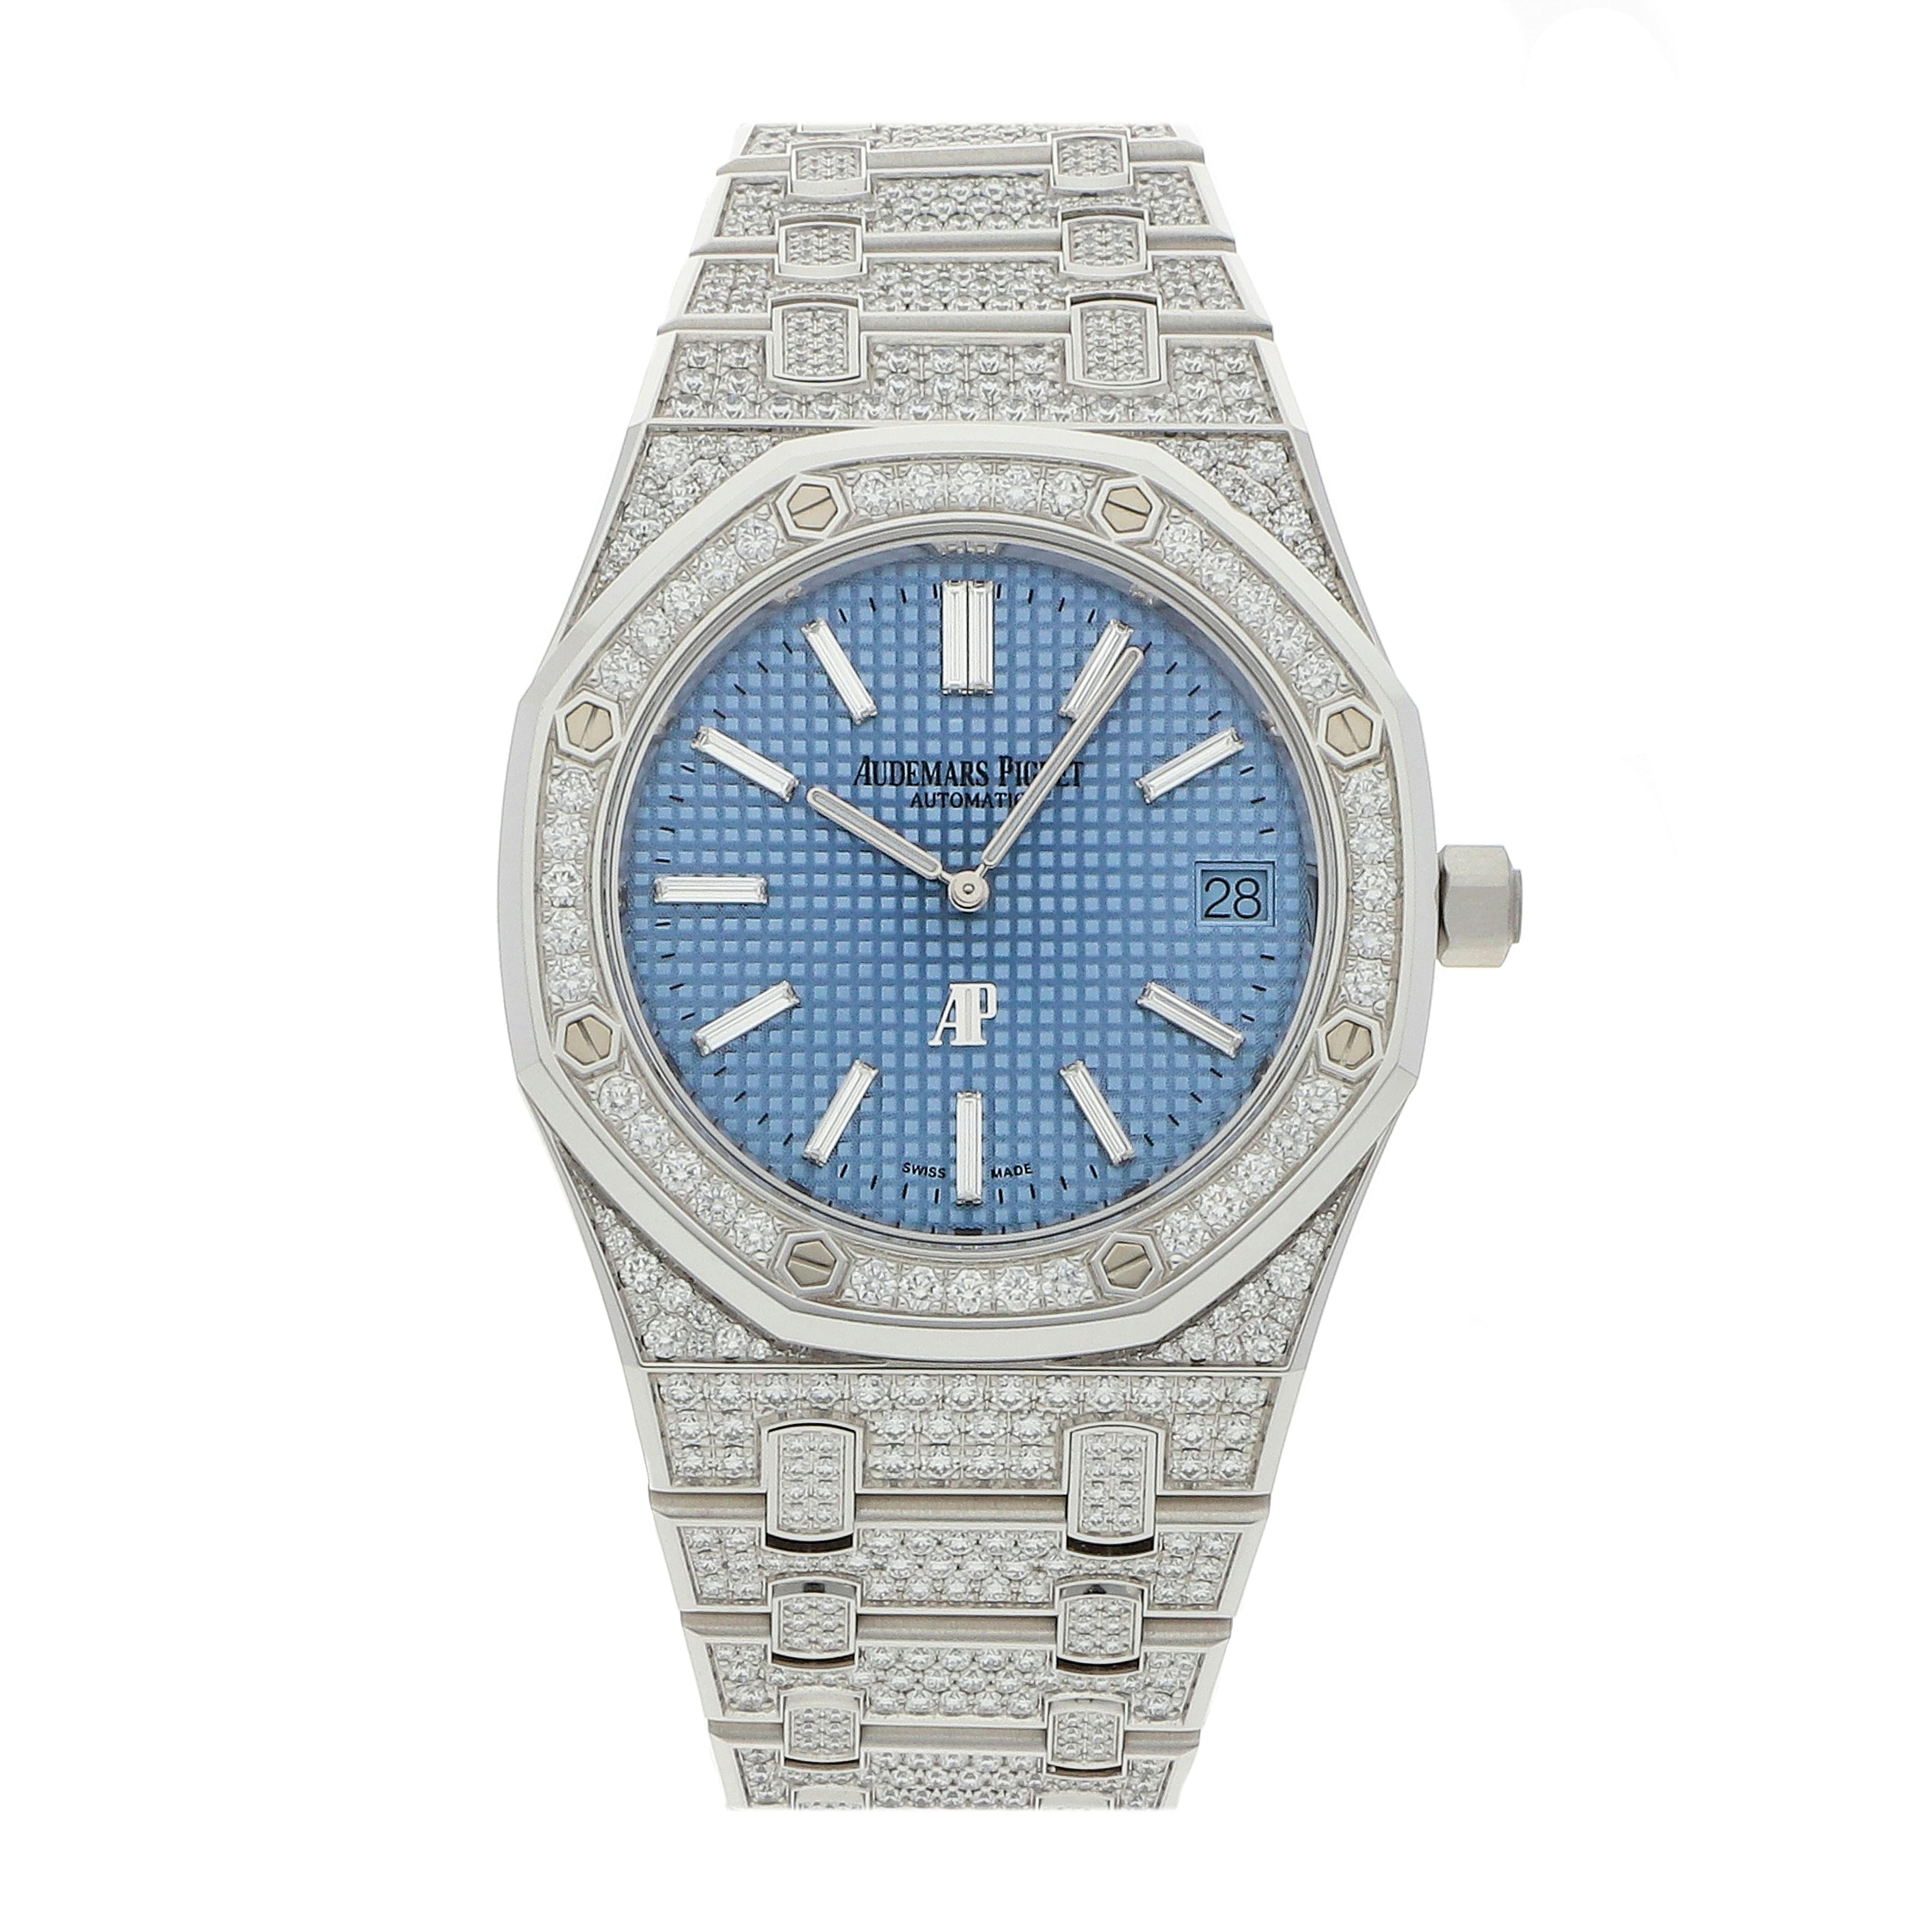 Buy Stylish Royal Oak Chronograph Audemars Piguet Watch for Men (BT173)